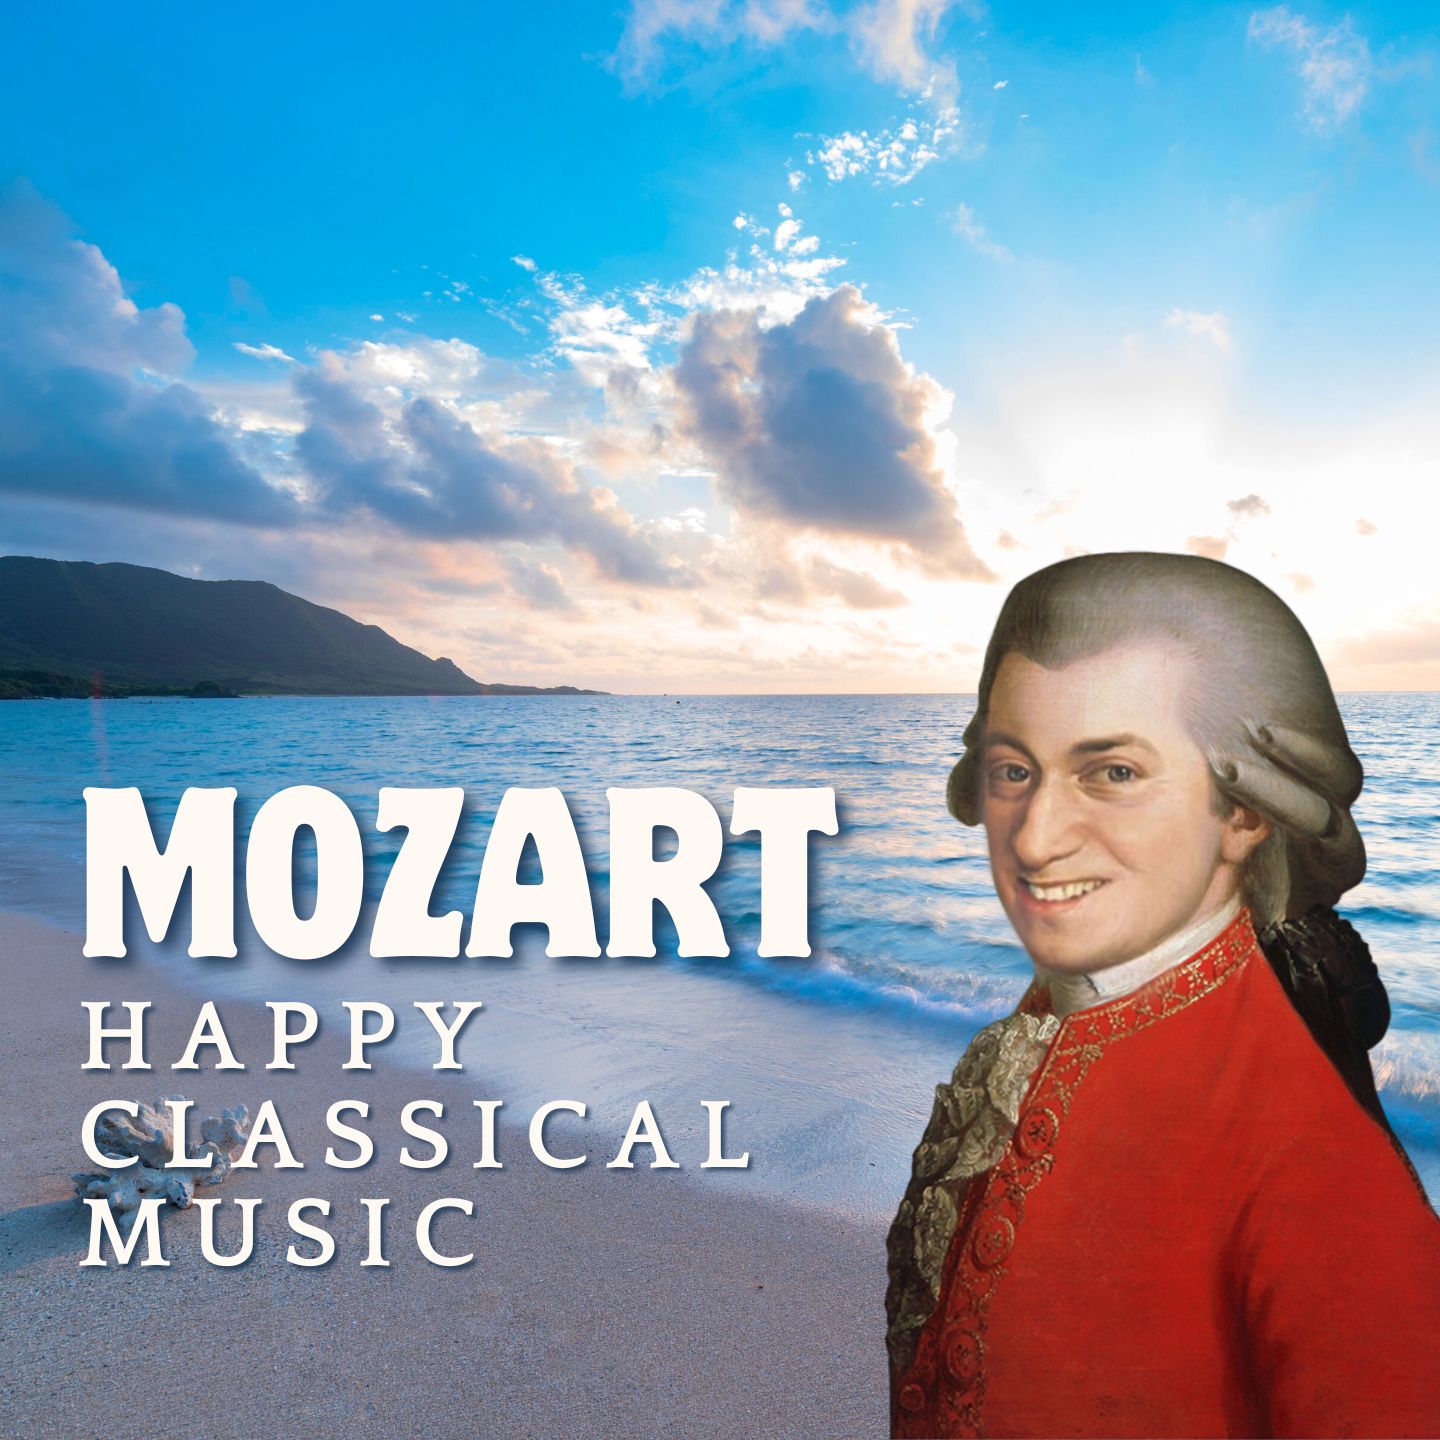 Mozart: Cheerful Summer Music for a Good Mood